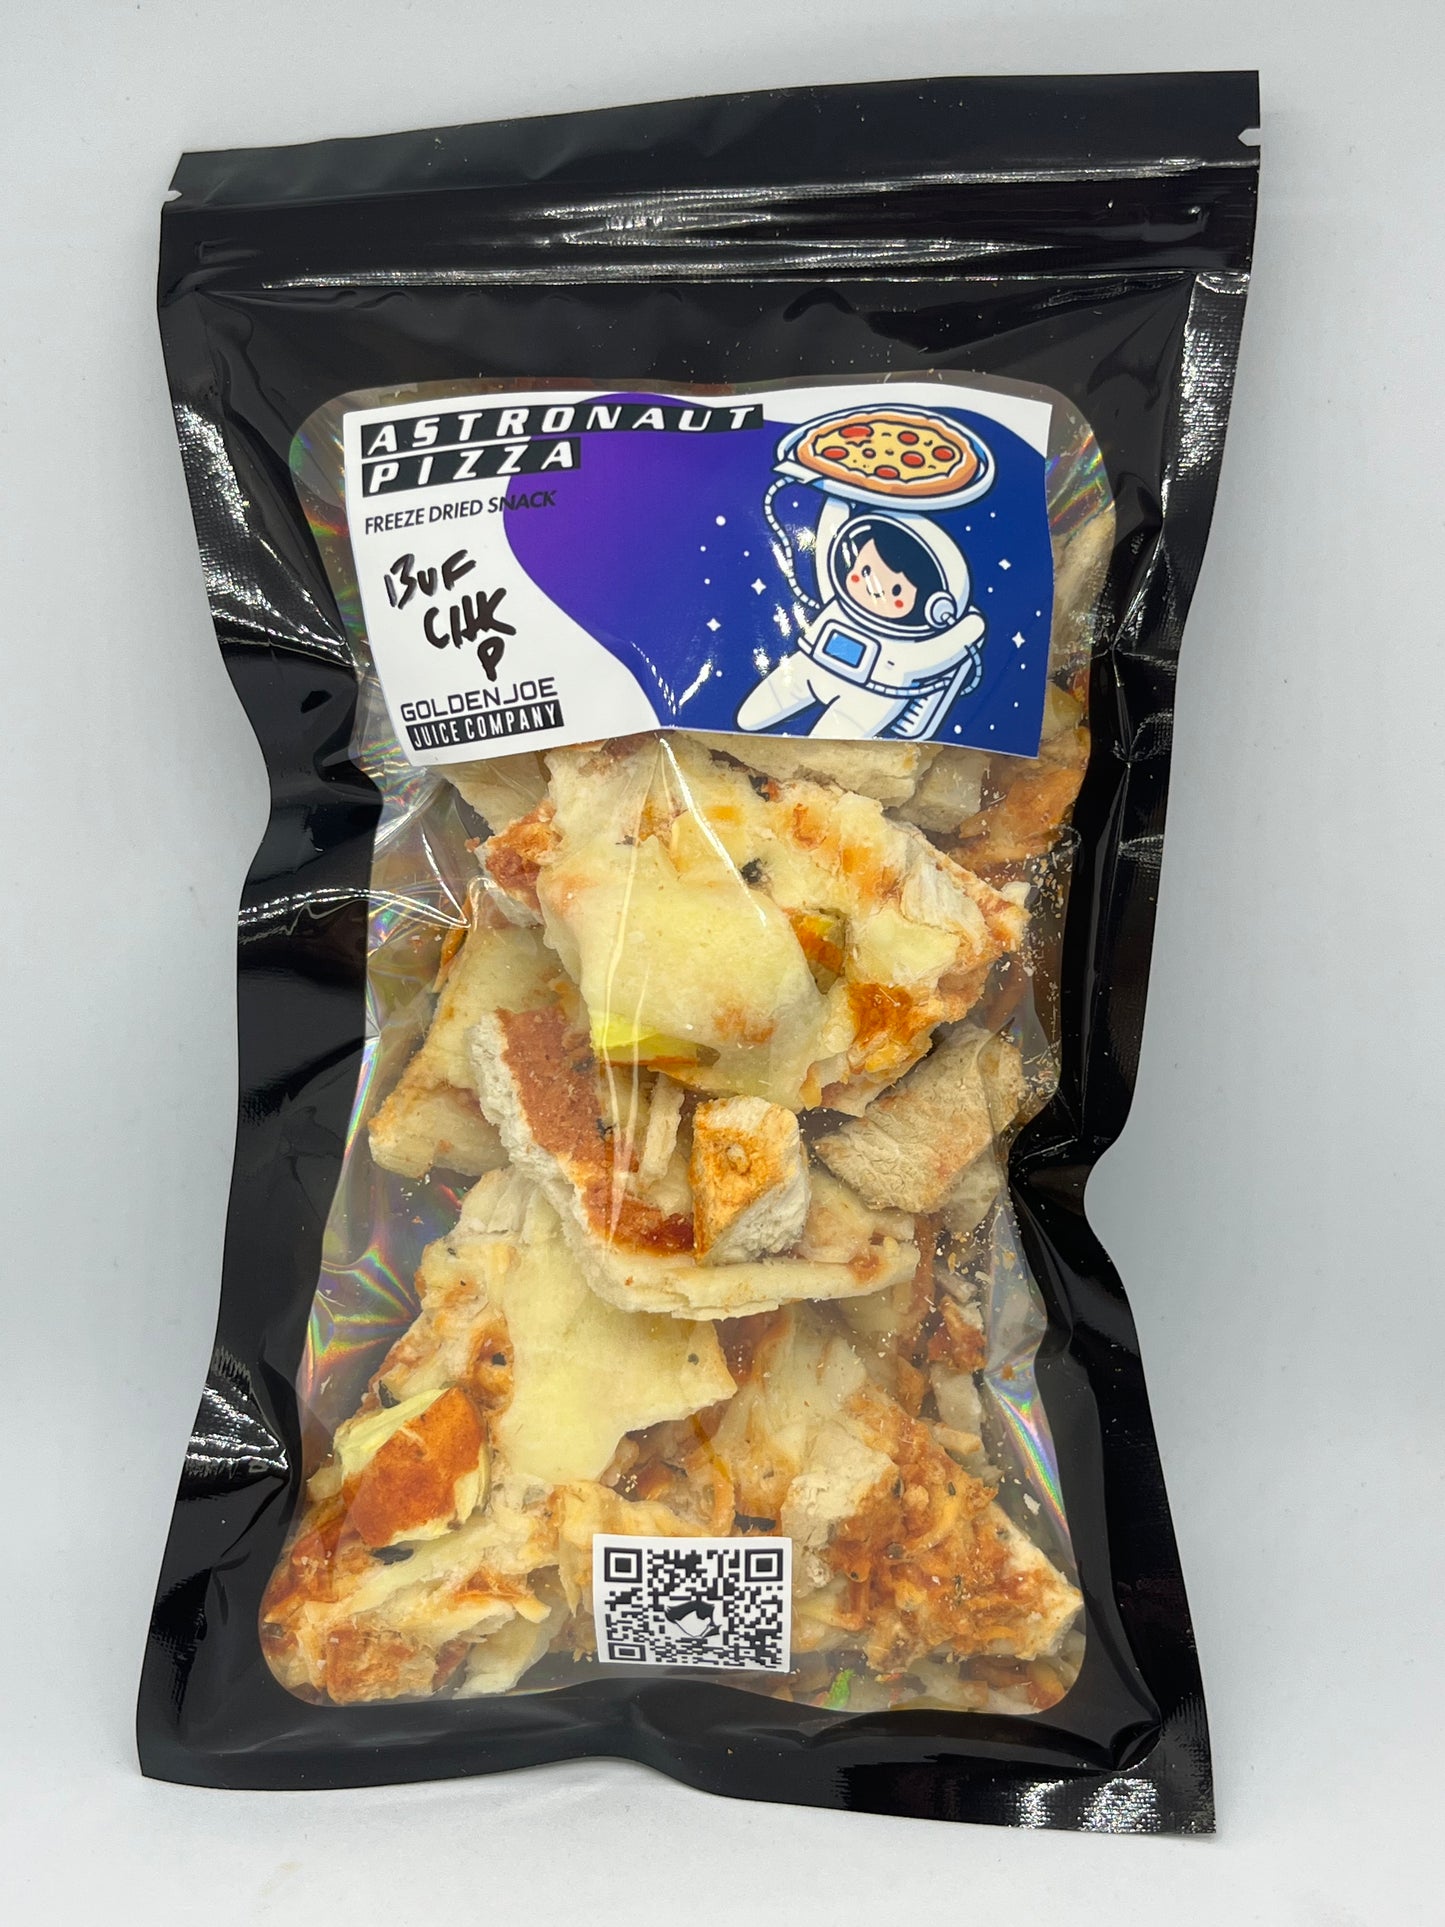 Astronaut Pizza